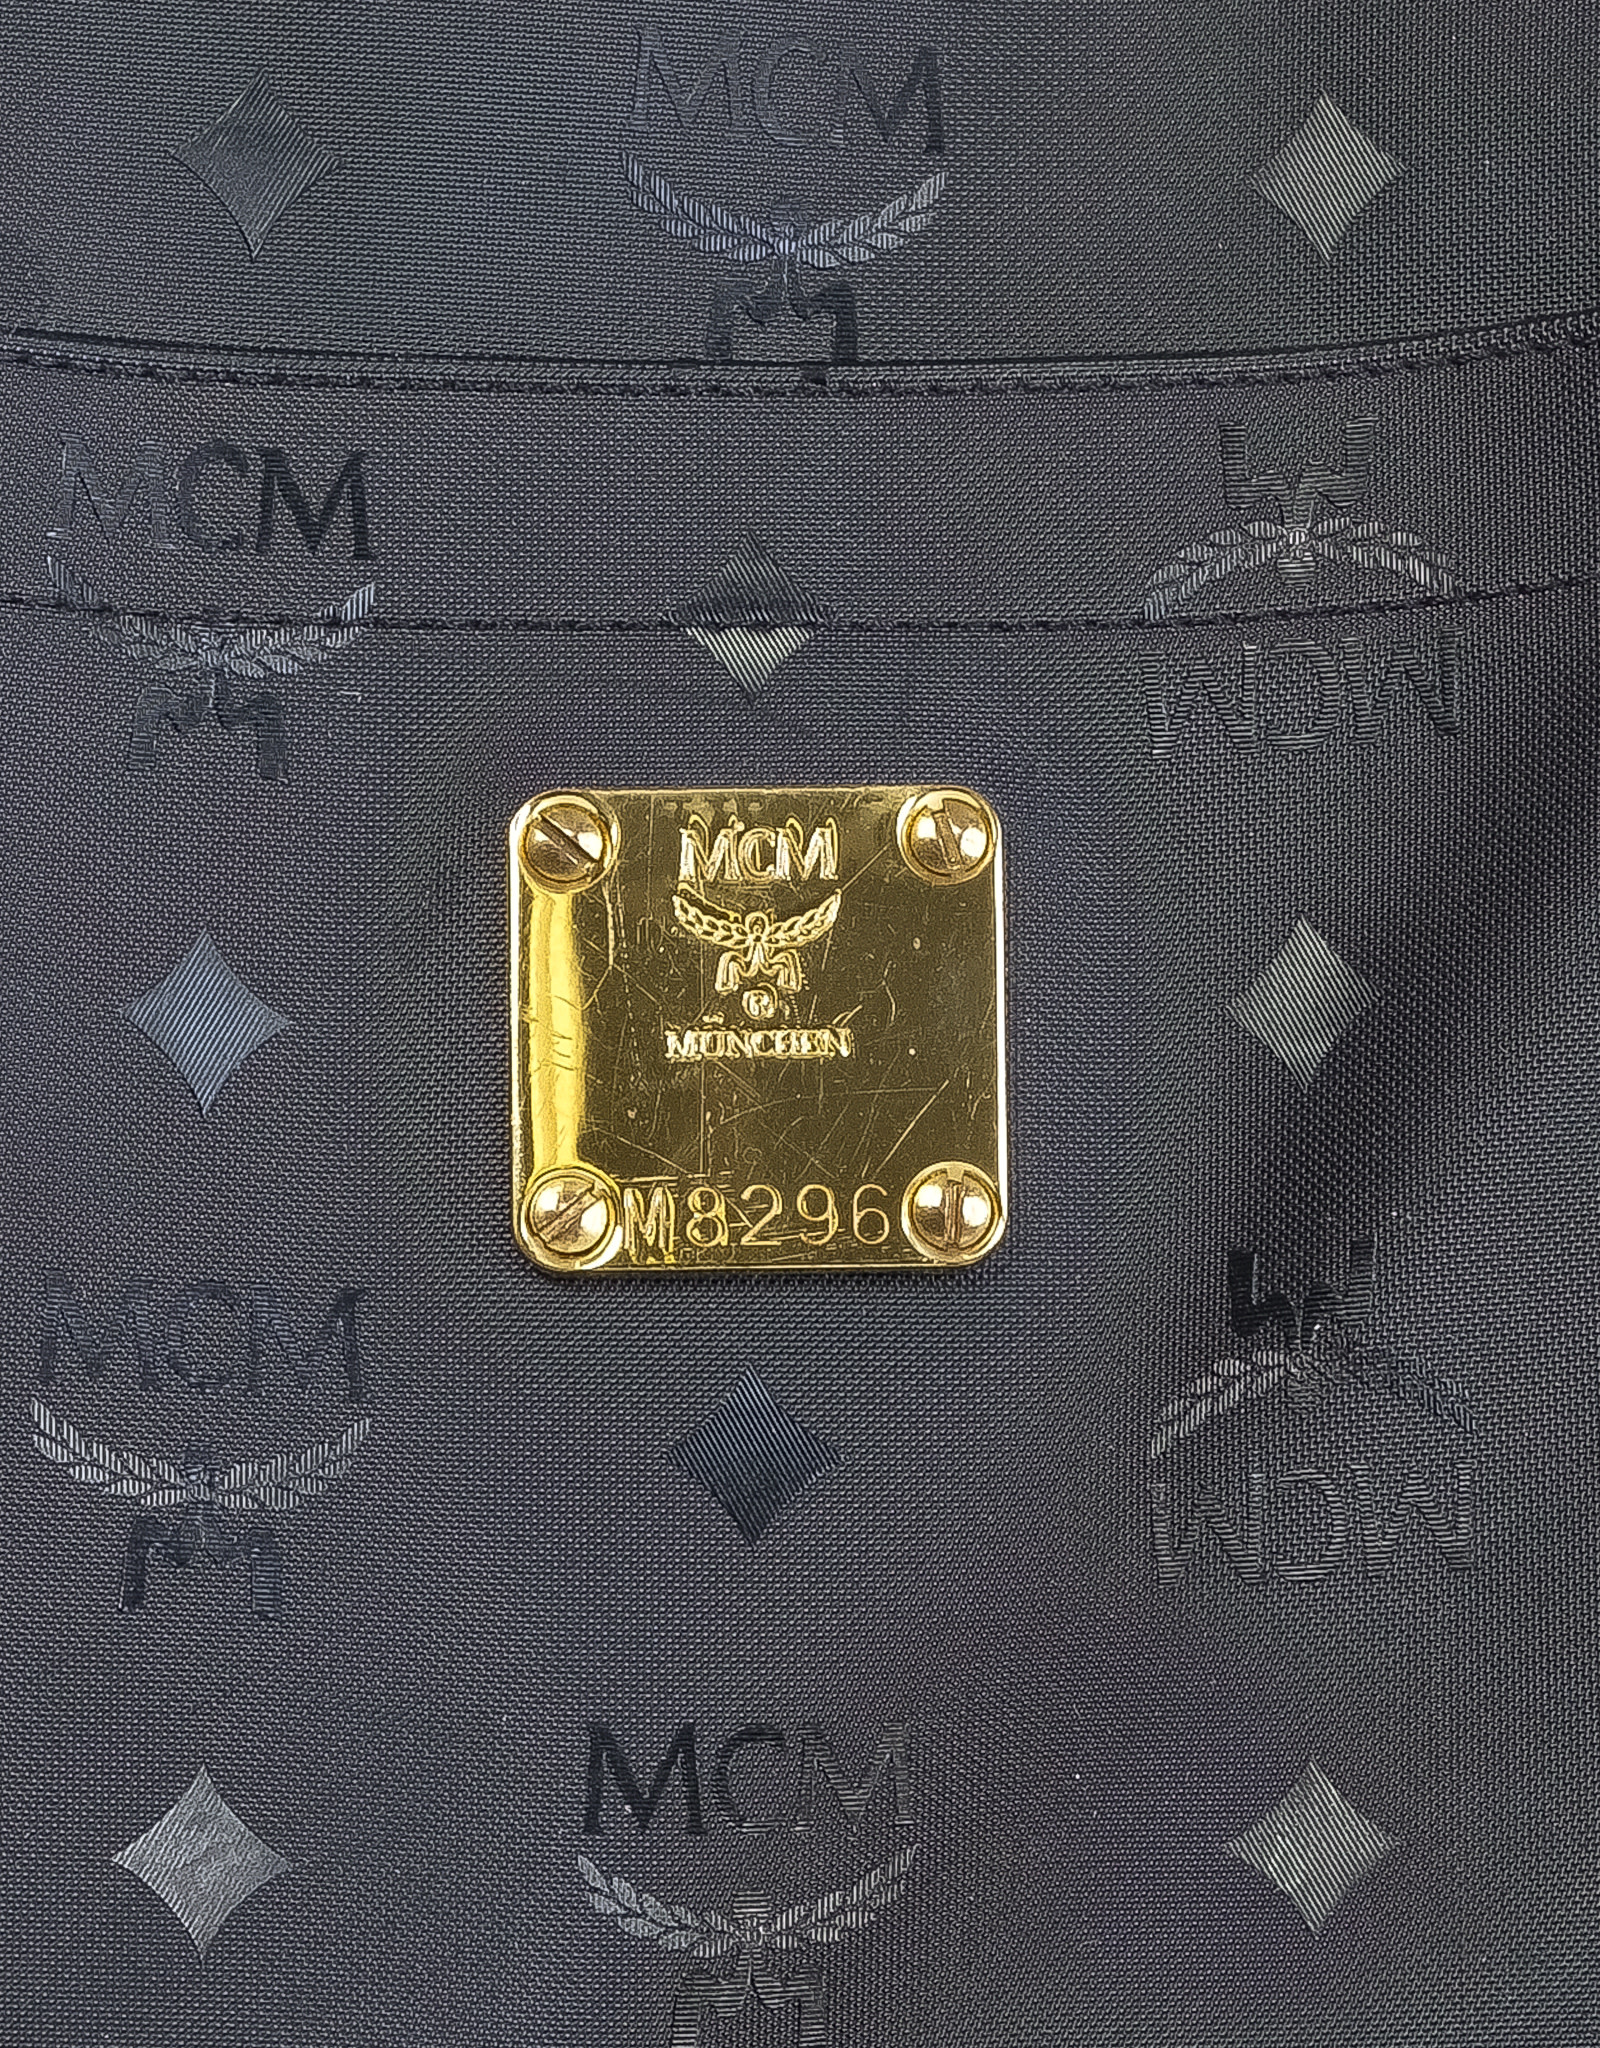 MCM, Bags, Authentic Preloved Mcm Sling Bag